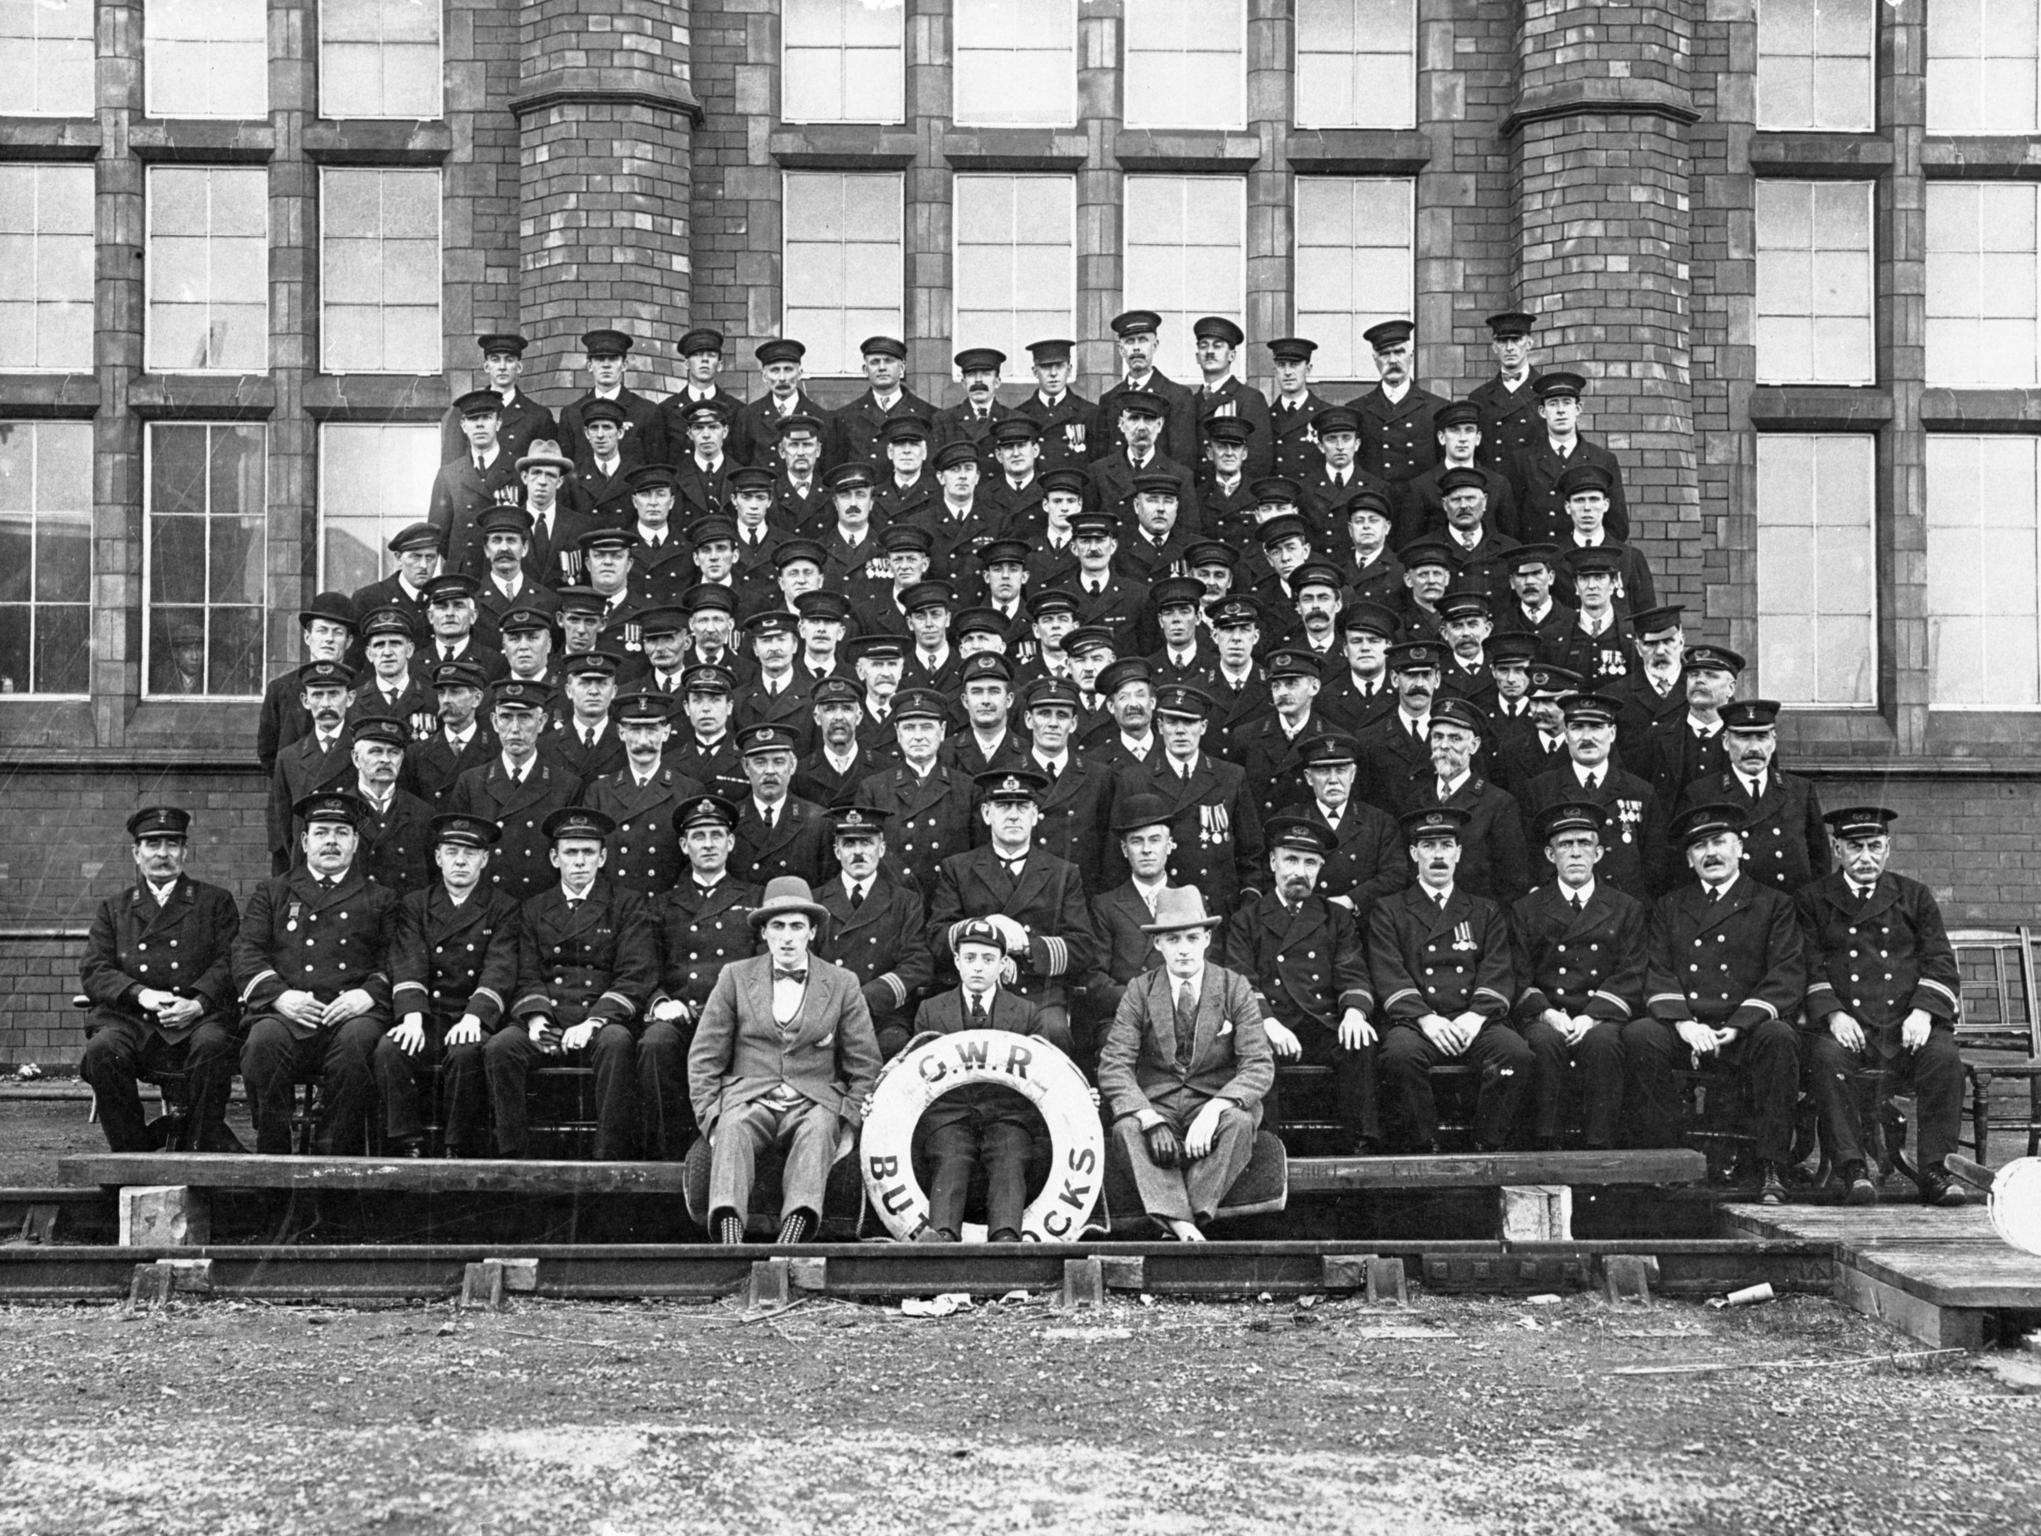 G.W.R. Bute Docks staff, photograph